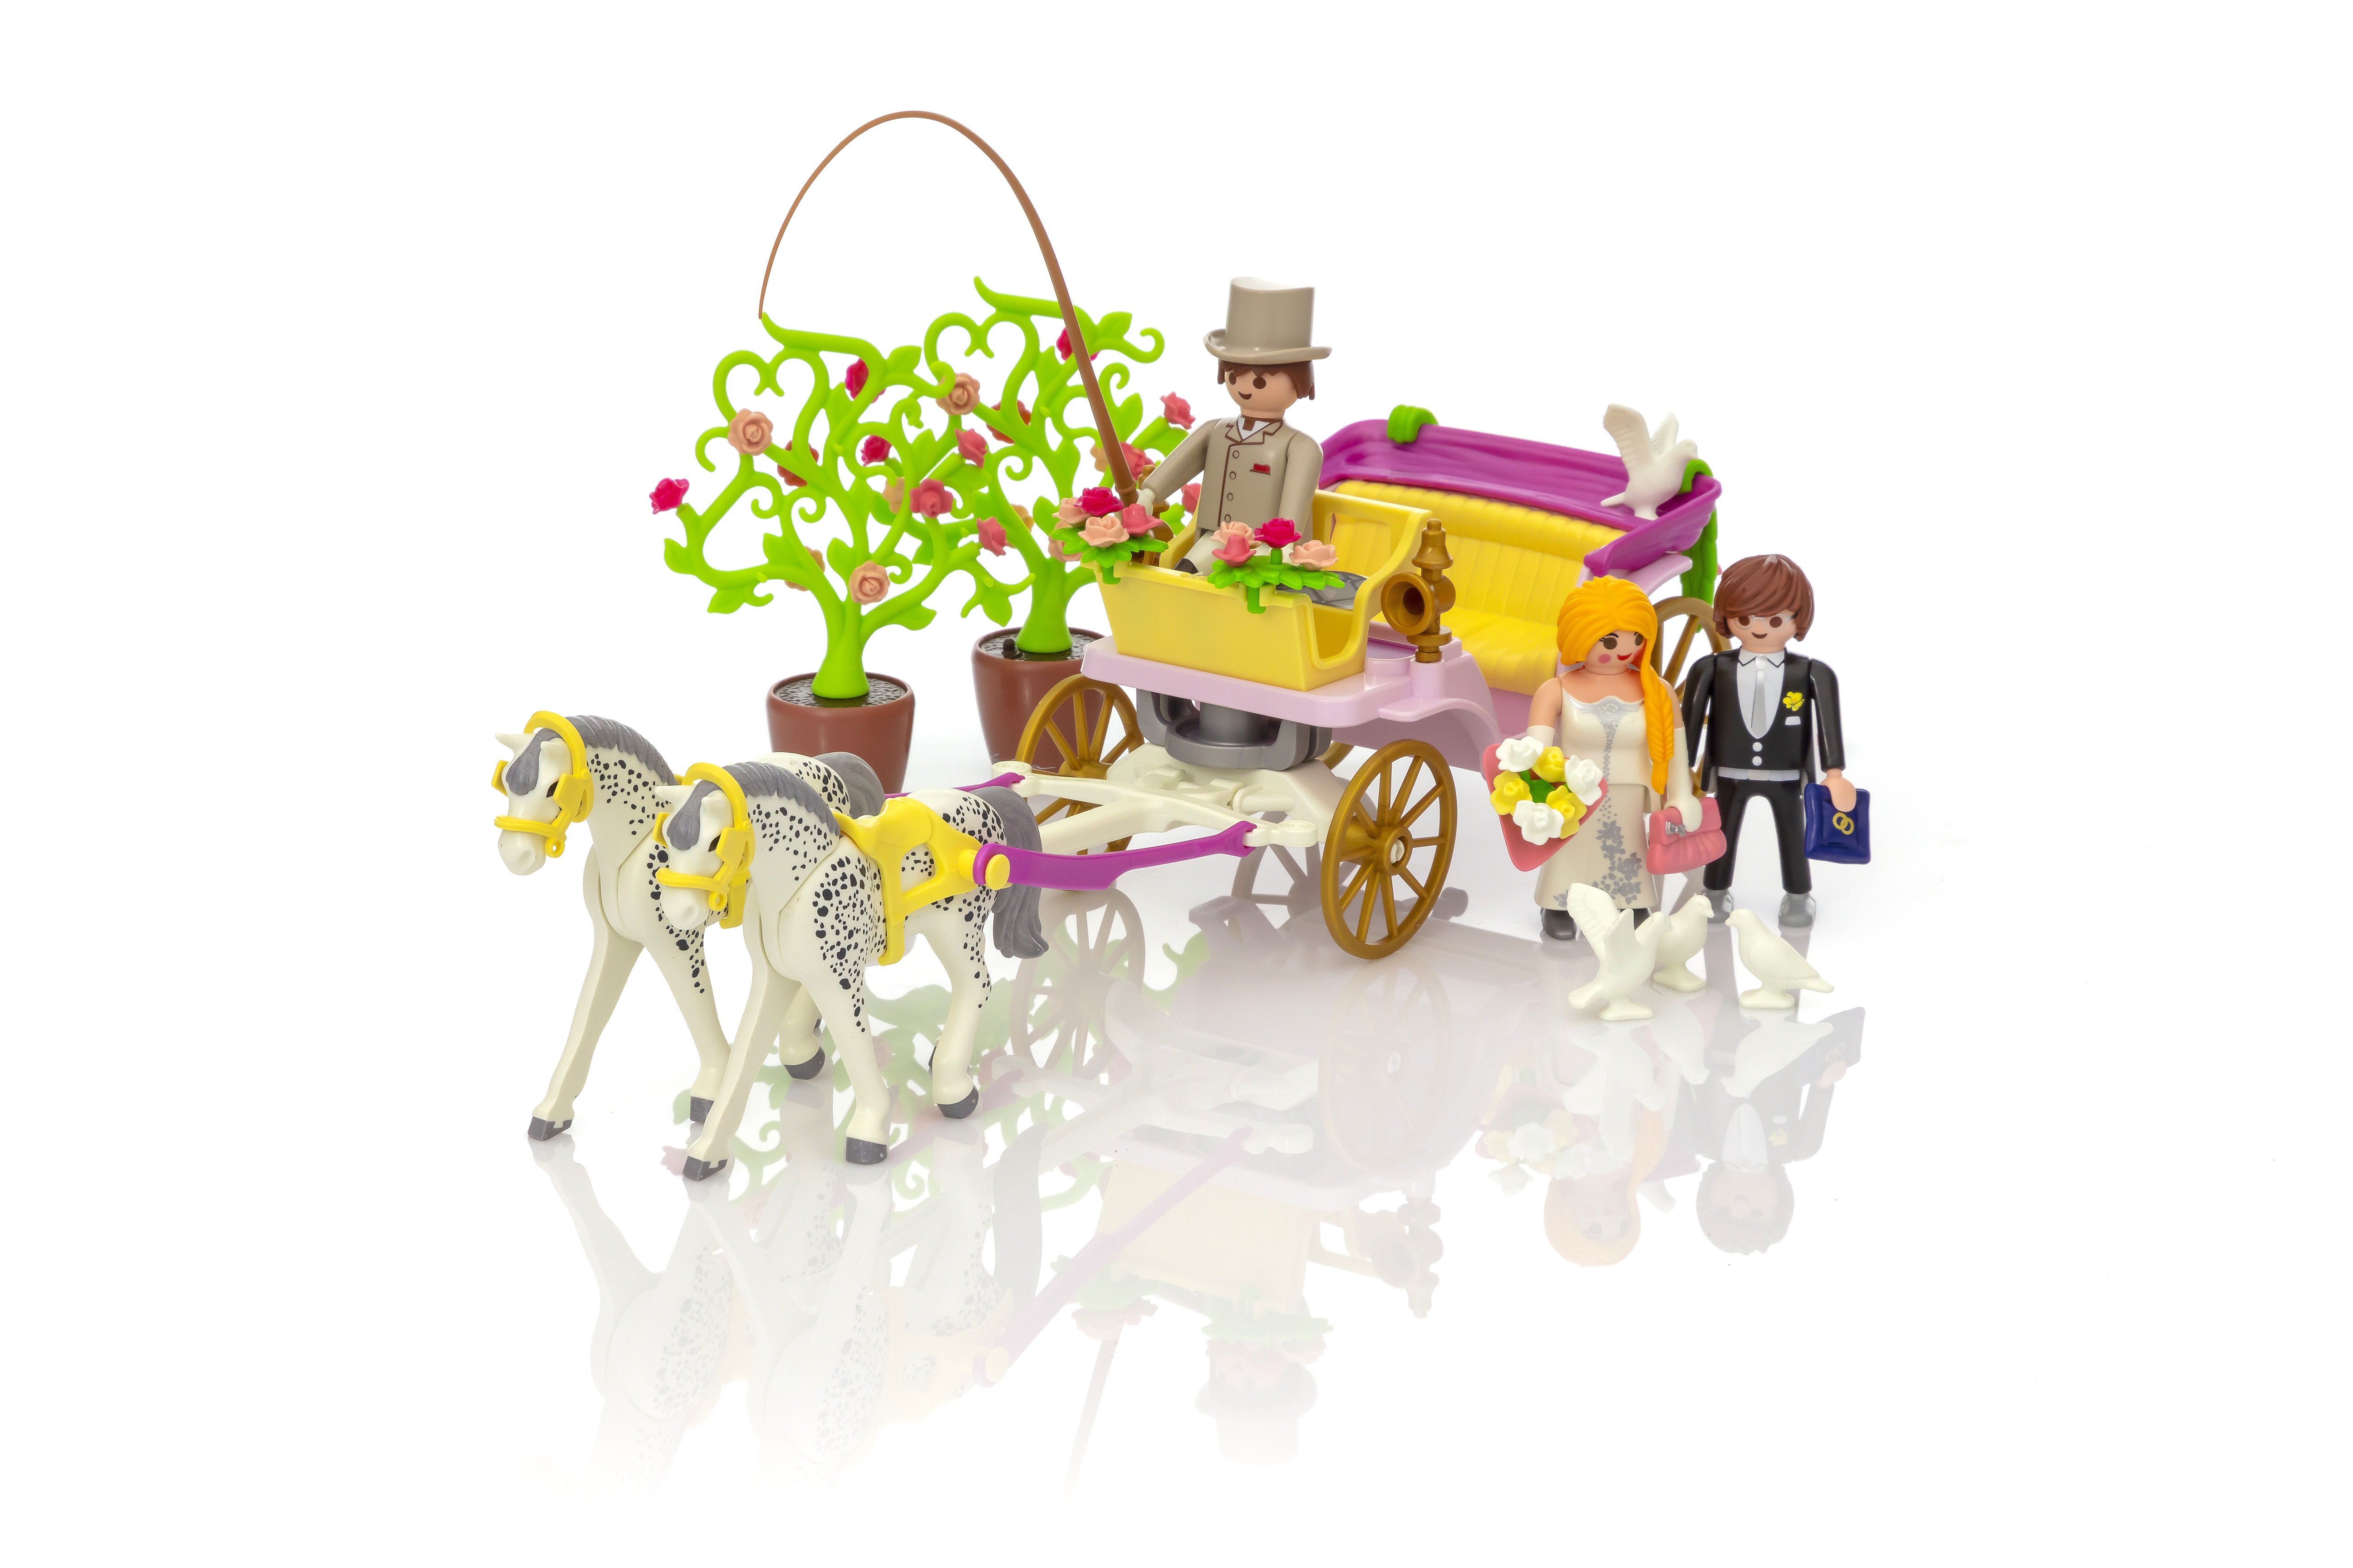 Playmobil 9427 City Life Wedding Carriage with Tin Can Trail, Fun